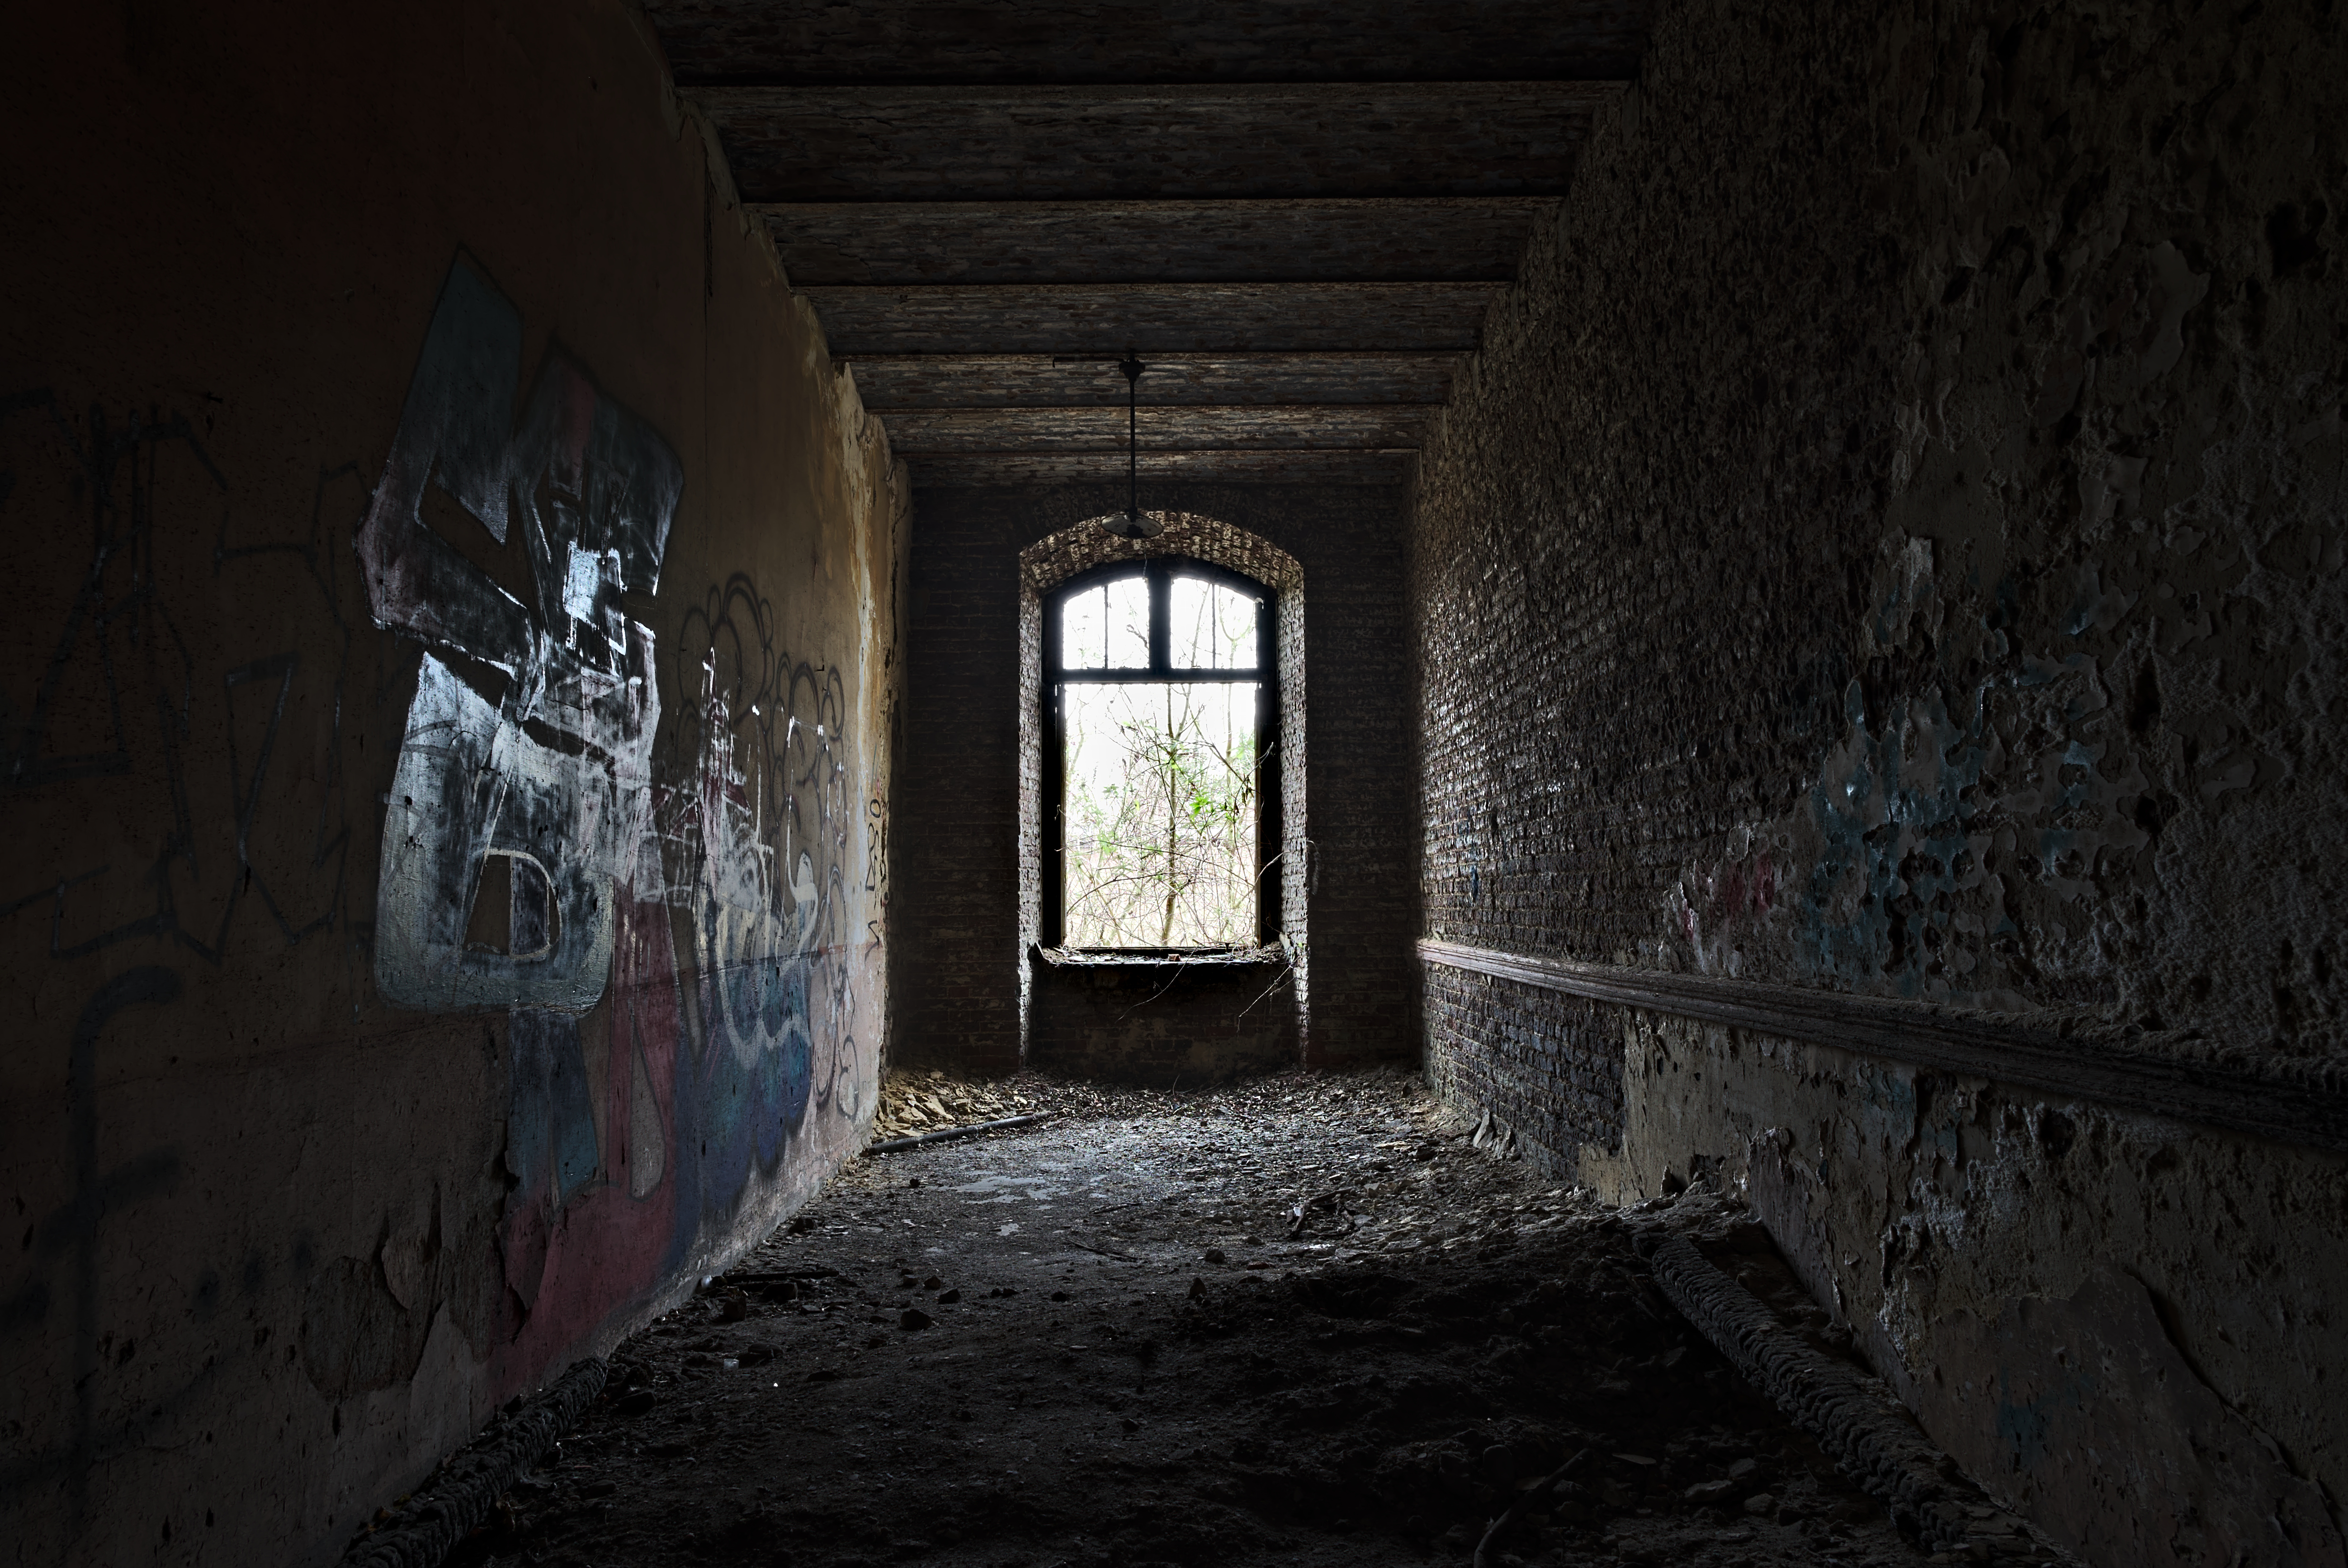 Window inside an abandoned military building in Fort de la Chartreuse, Liege, Belgium (DSCF3349-hdr)